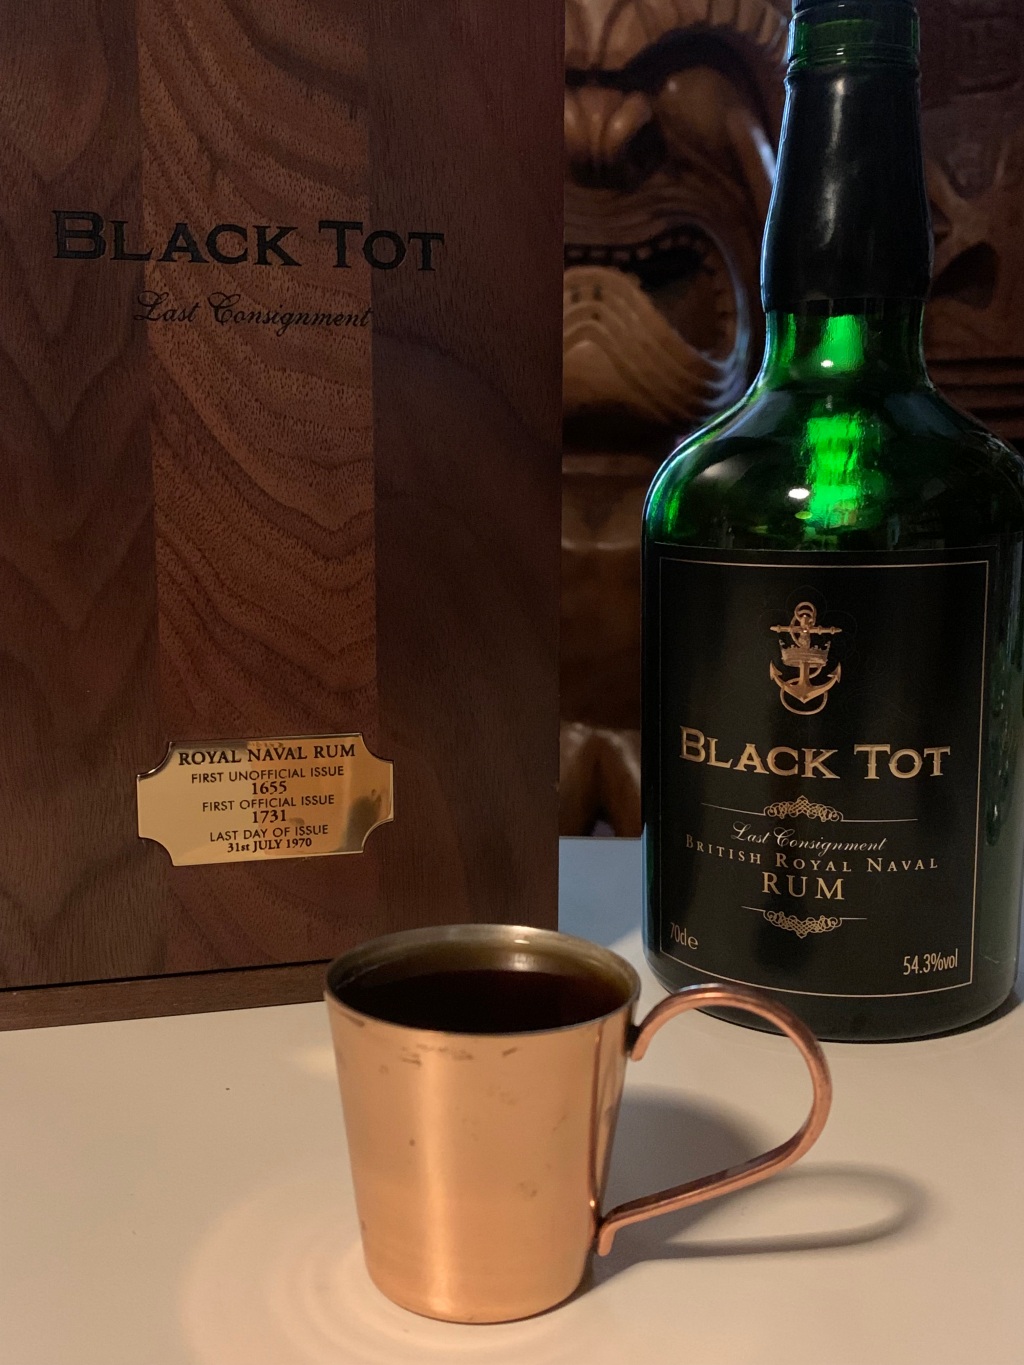 Black Tot “Last Consignment” British Royal Navy Rum – 54.3%